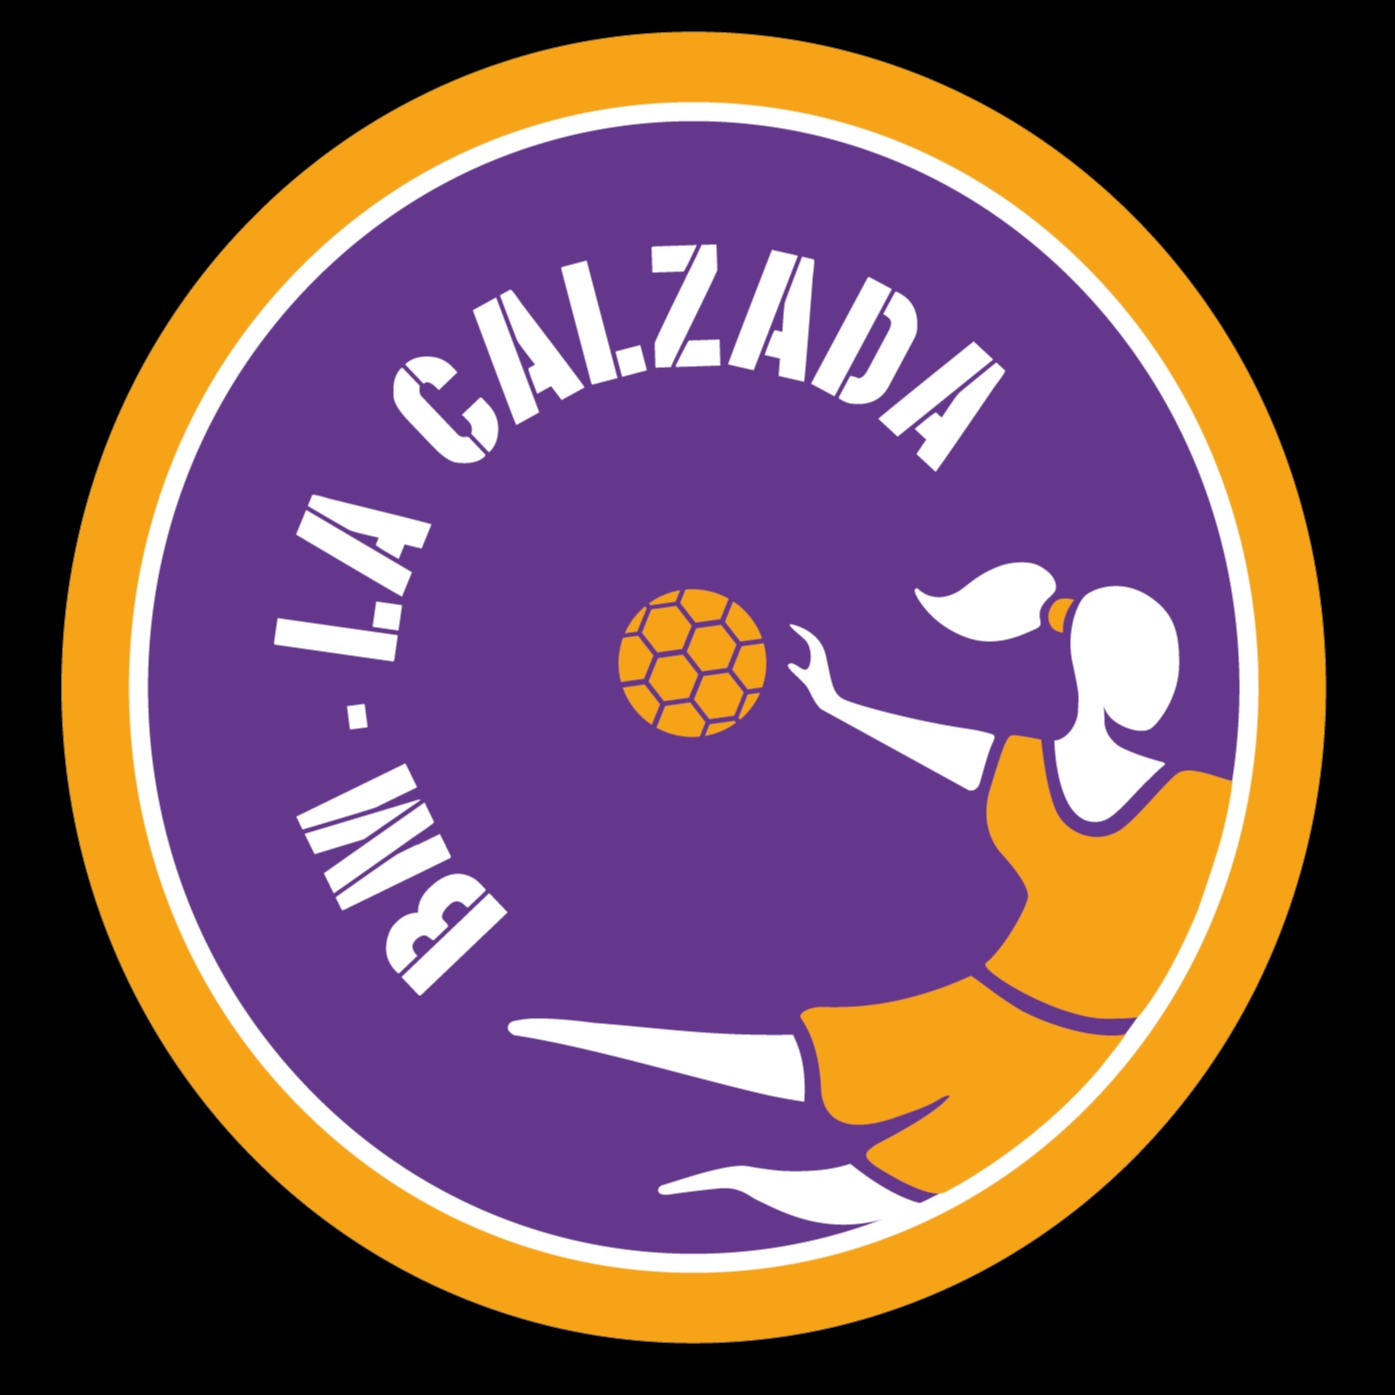 CLUB BALONMANO LA CALZADA